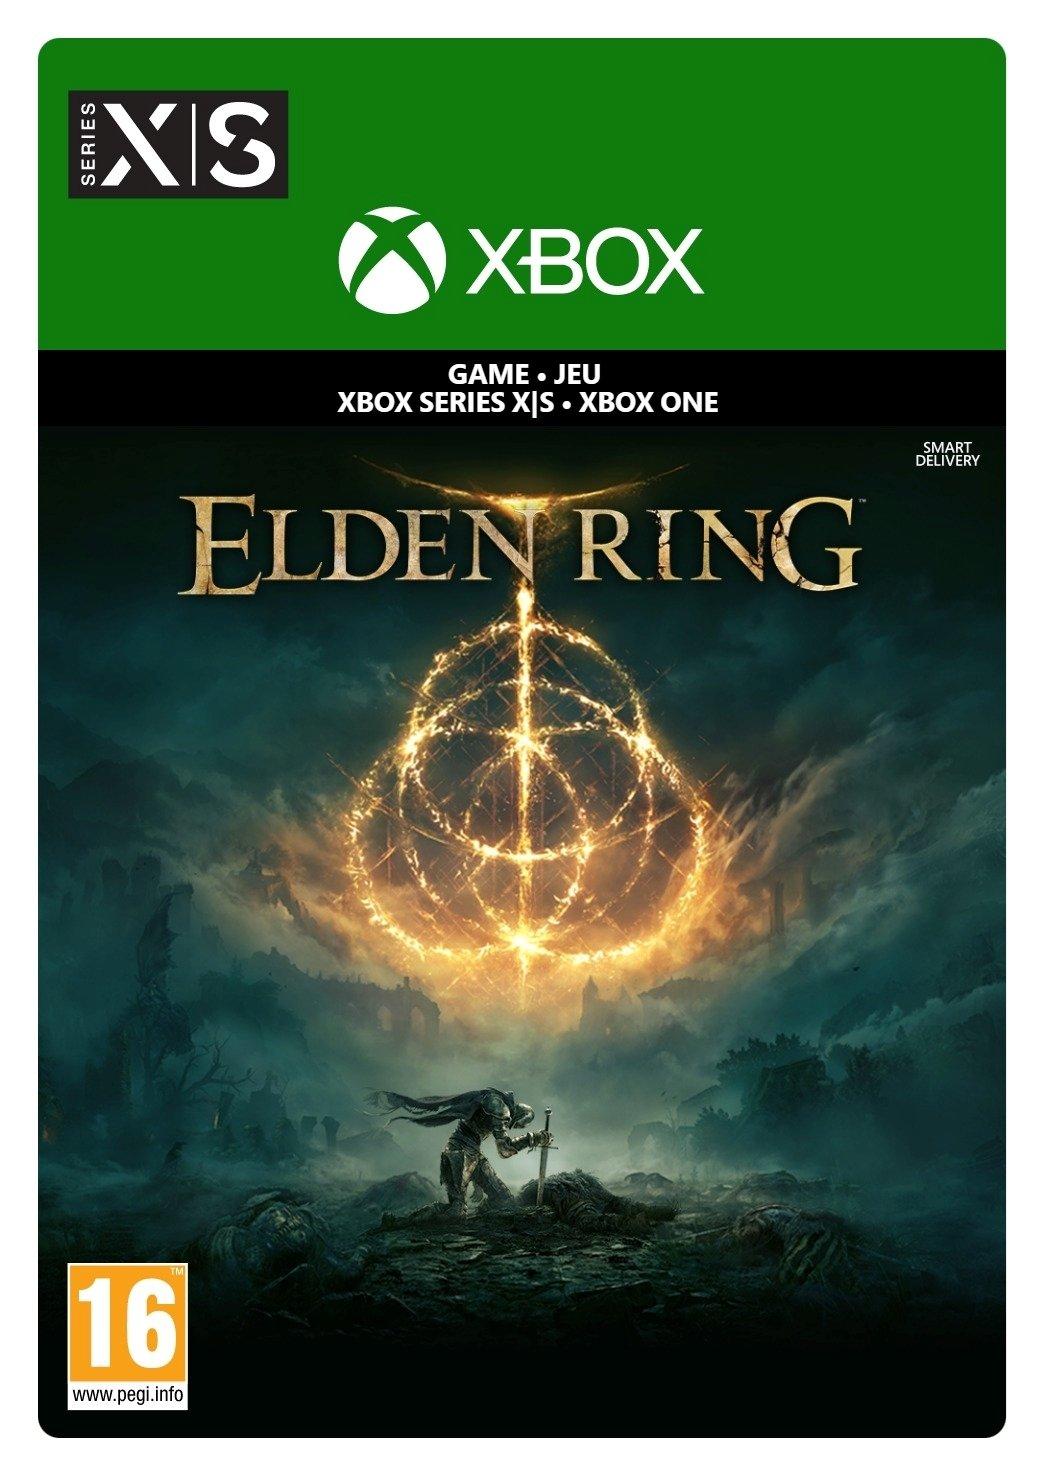 Elden Ring - Standard Edition - Xbox Series X/Xbox One - Game | G3Q-01316 (66f2e8df-d2ad-3043-9d6e-2c6a667c0c35)